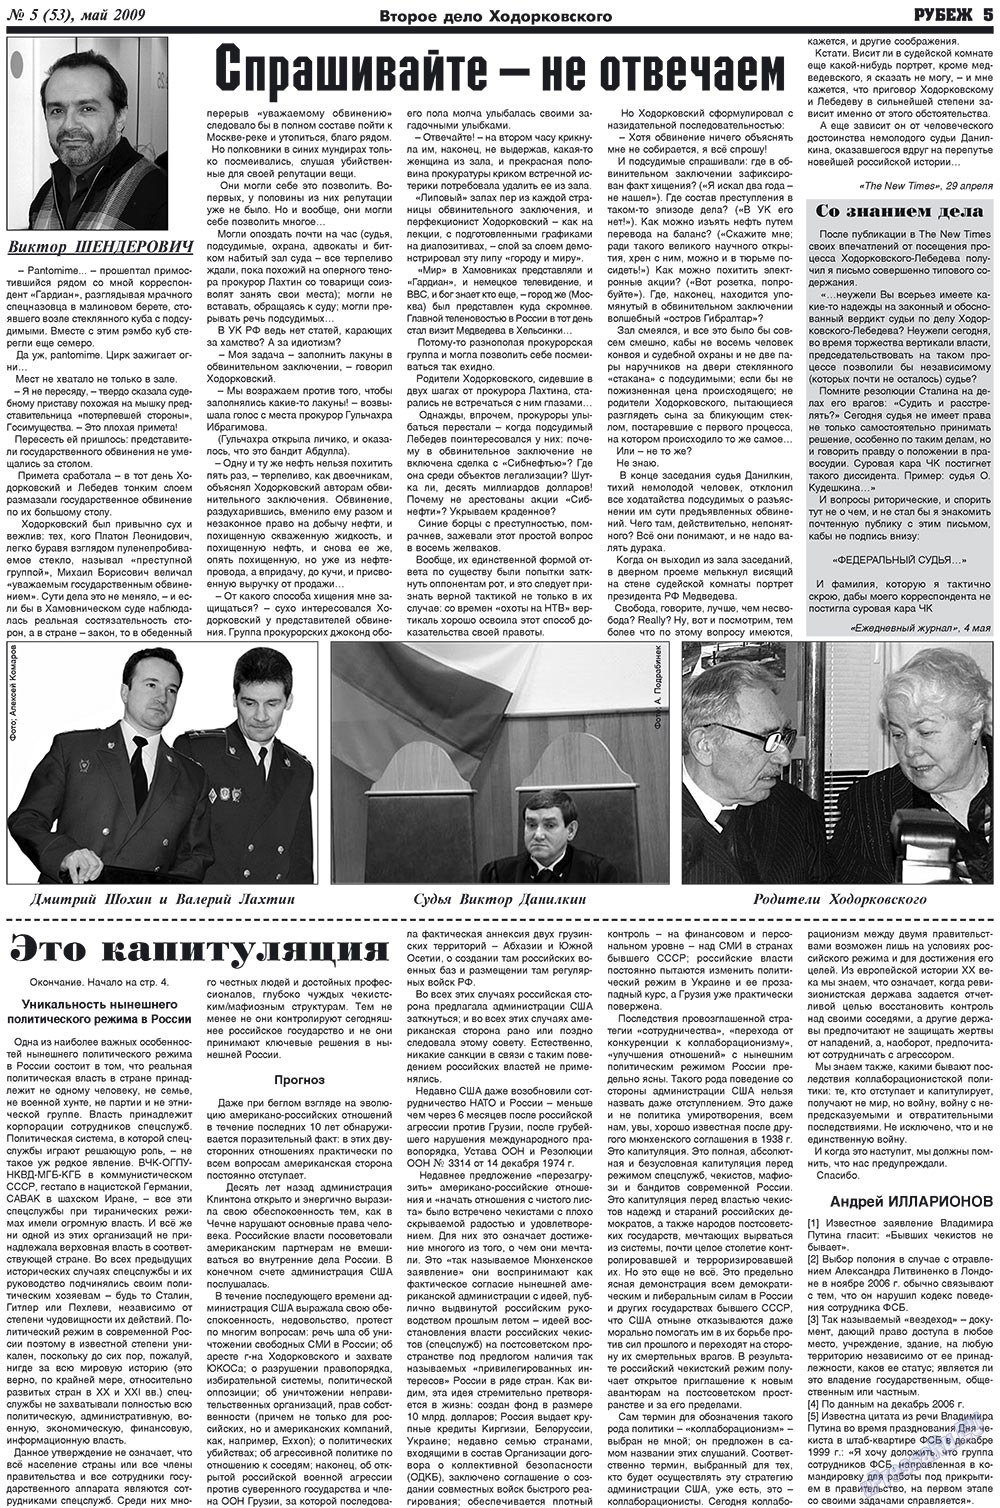 Рубеж, газета. 2009 №5 стр.5